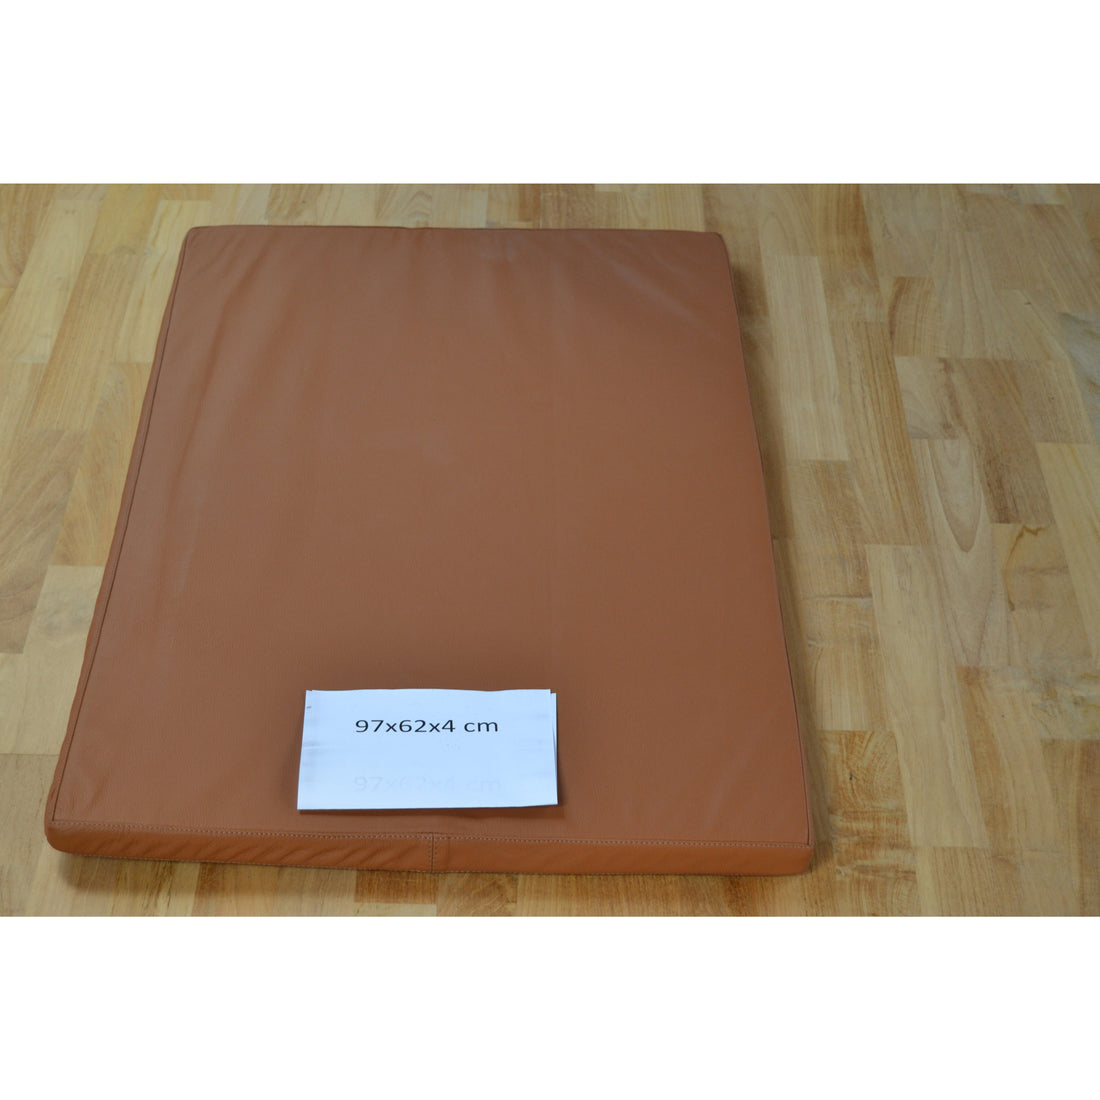 Cognac leather cushion 97x62x4 cm